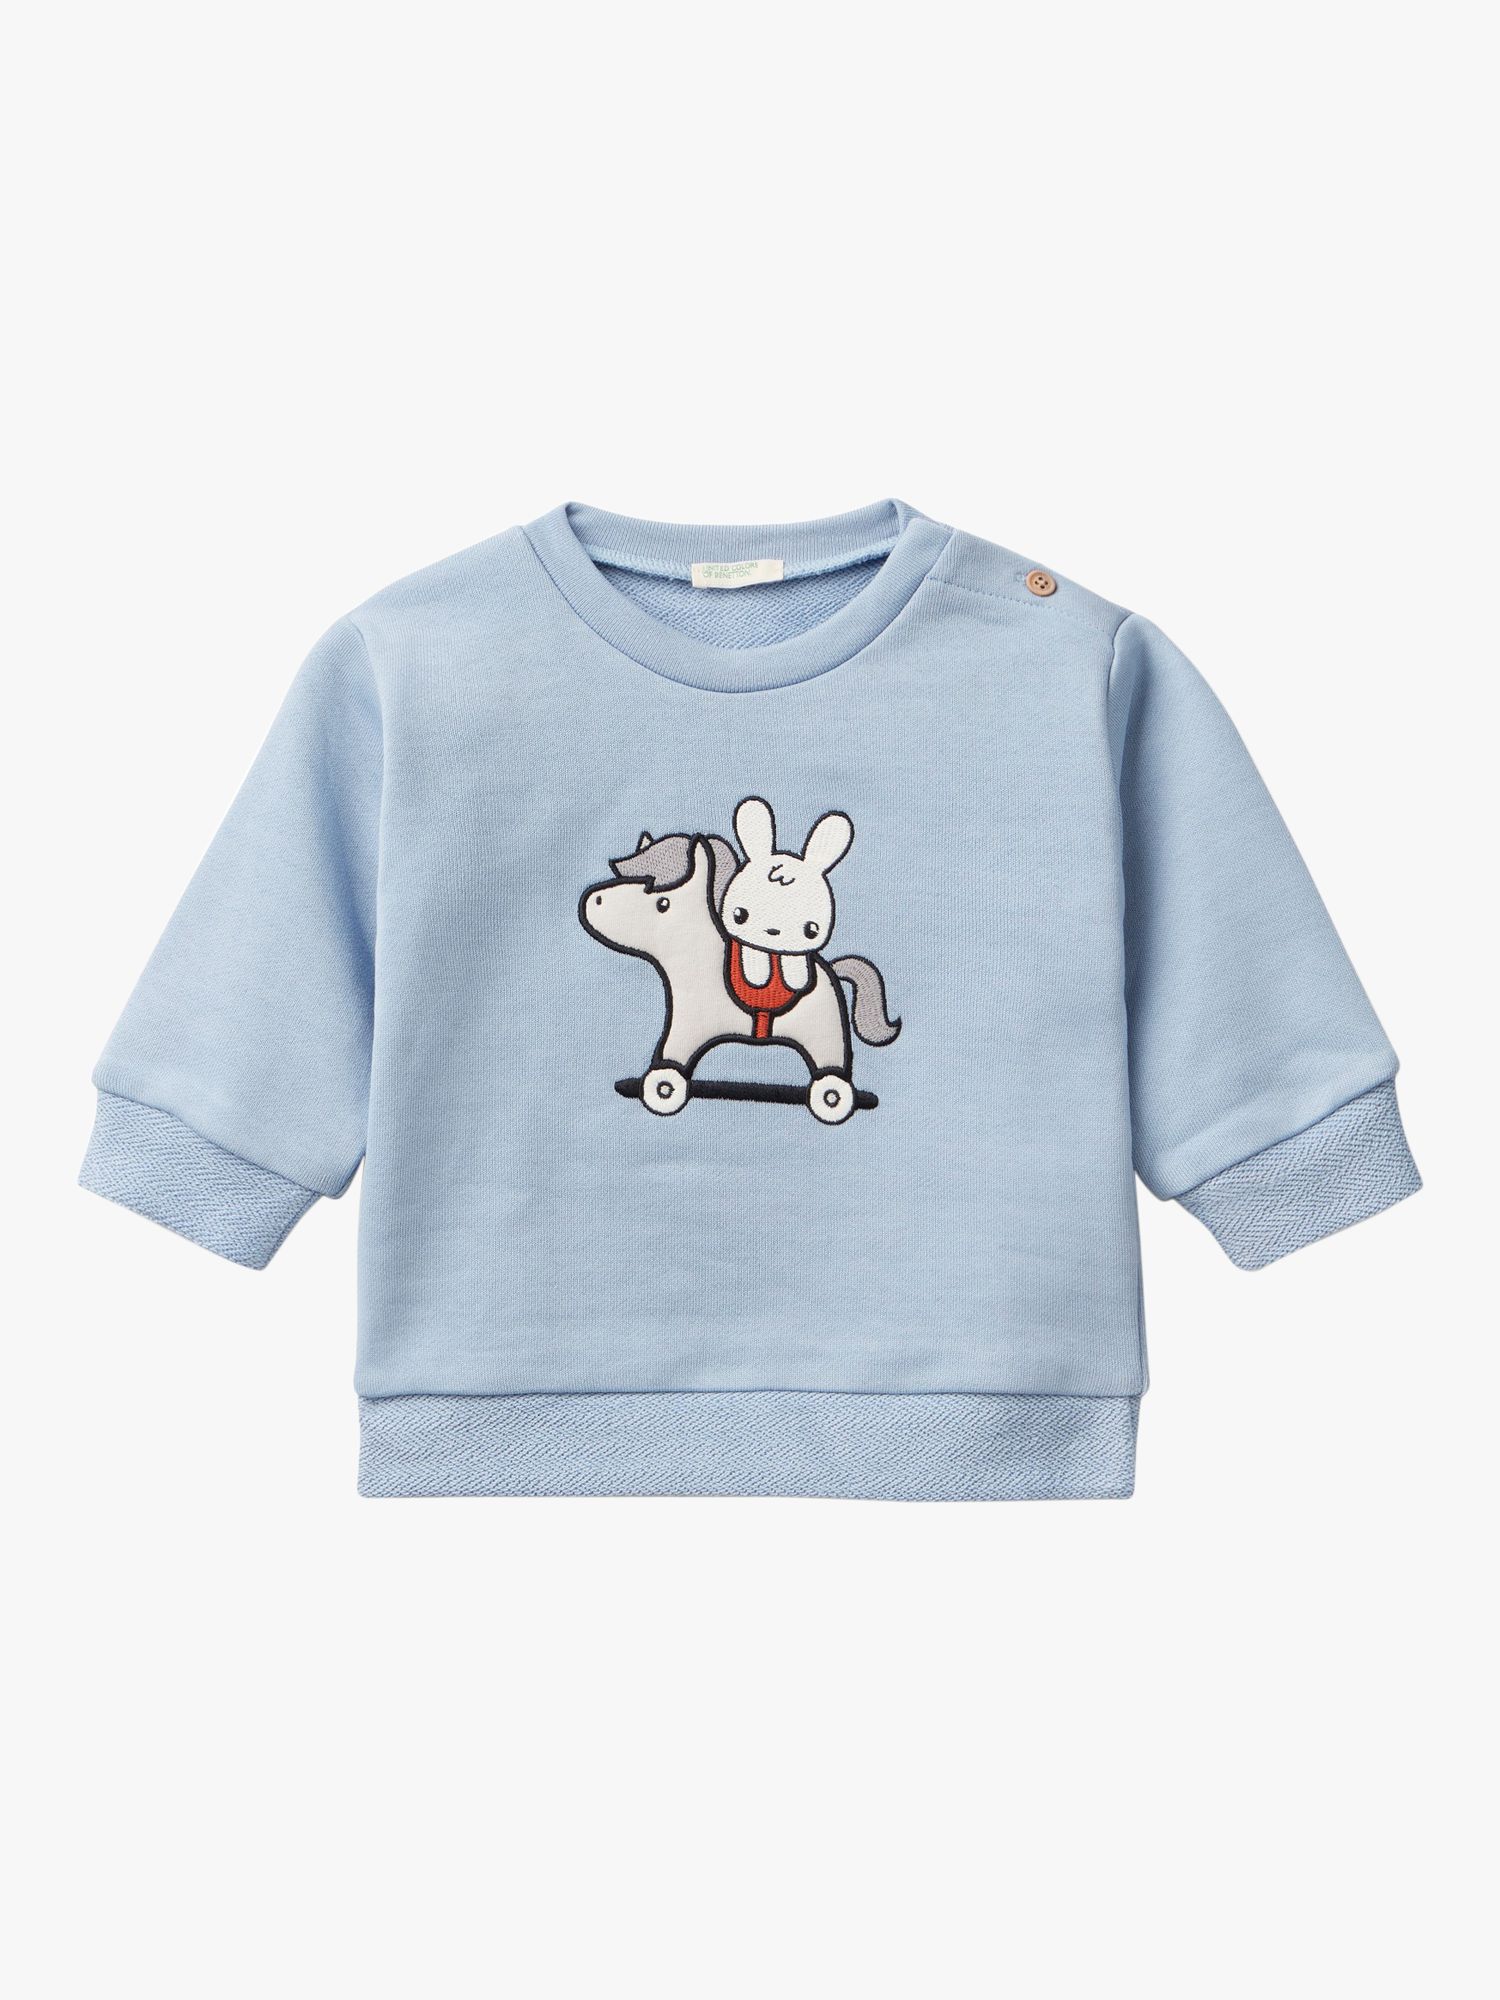 Benetton Baby Bunny Applique Sweatshirt, Light Blue Powder, 0-3 months